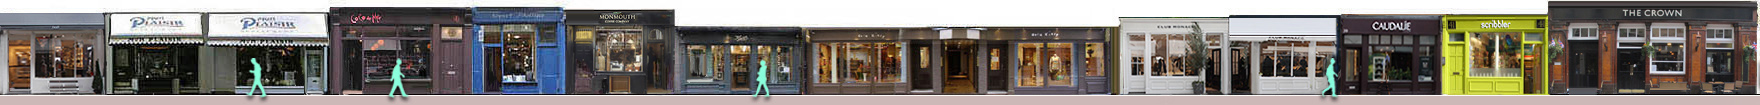 Monmouth Street shops: Fresh make-up, Mon Plaisir restaurant, Kiehl's, Club Monaco, Caudalie